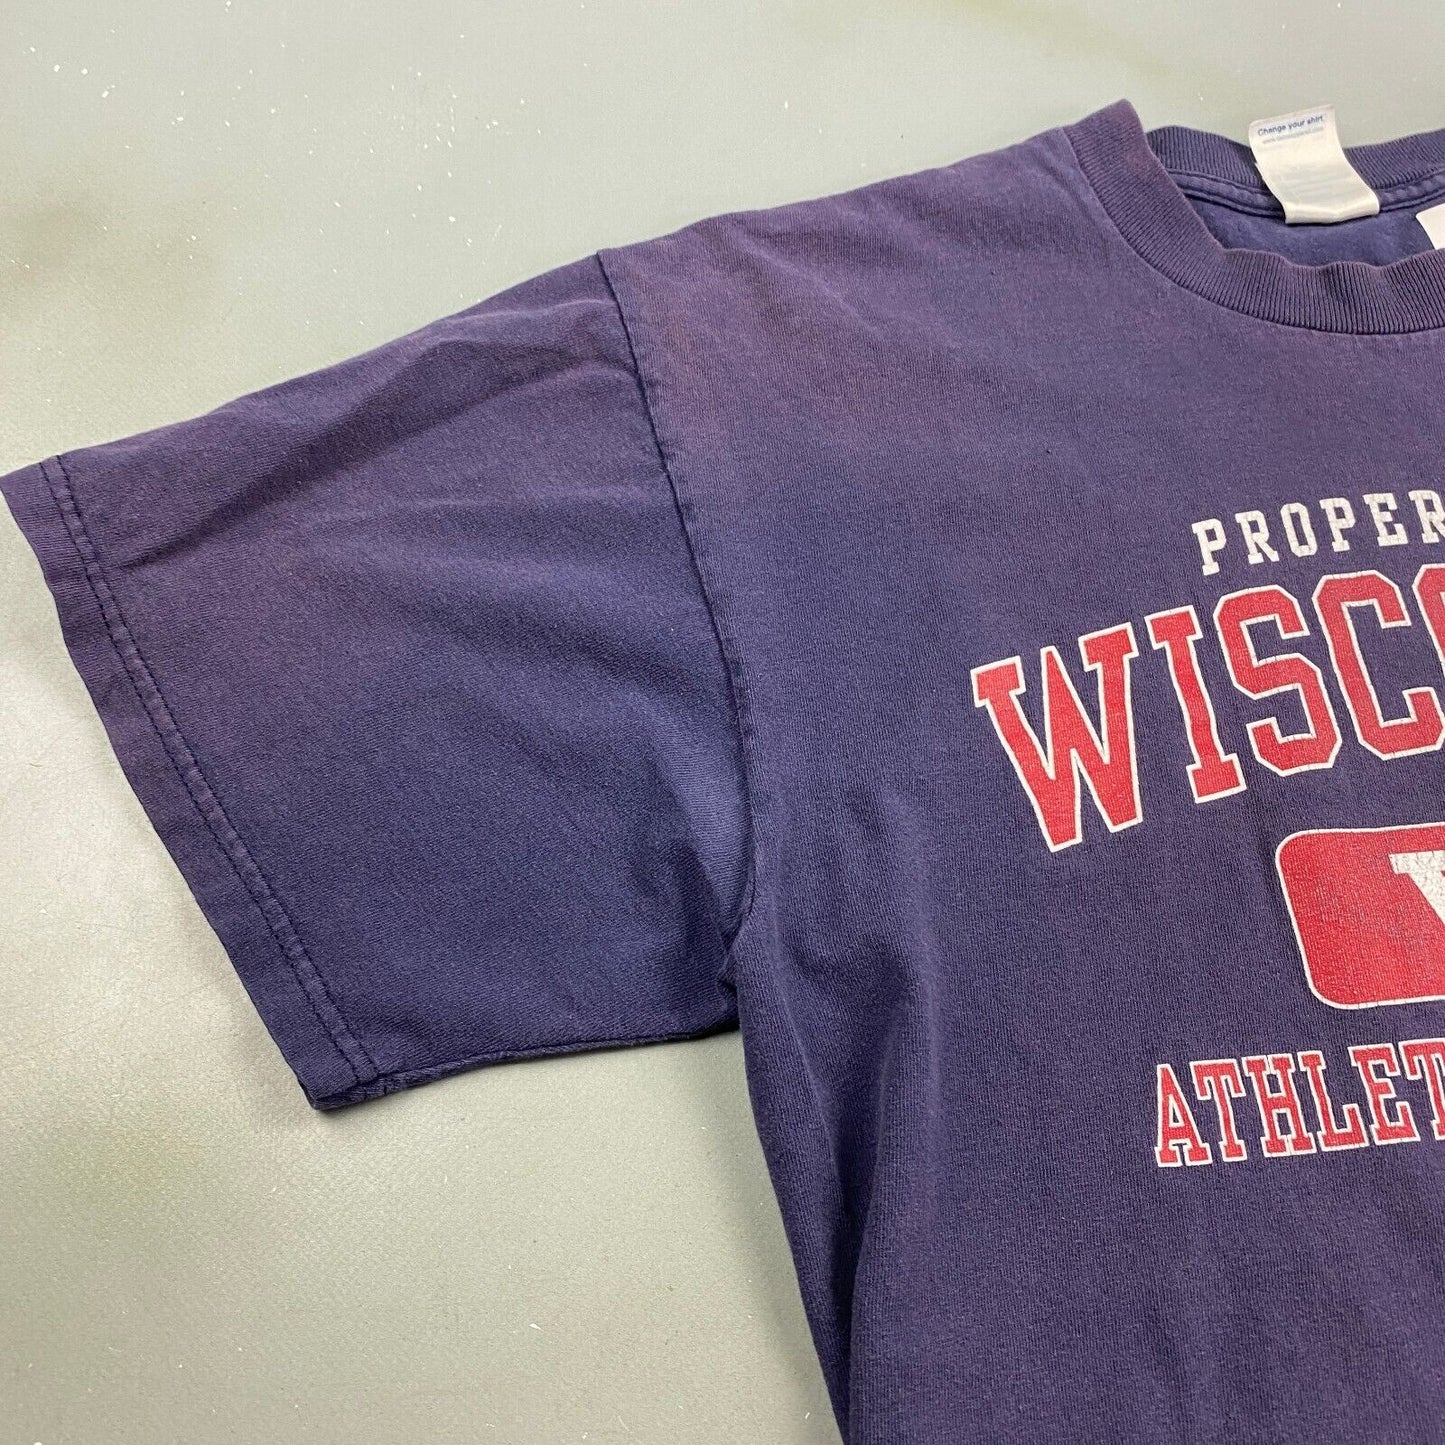 VINTAGE Property Of Wisconsin Athletic Dept Faded T-Shirt sz Large Men Adult